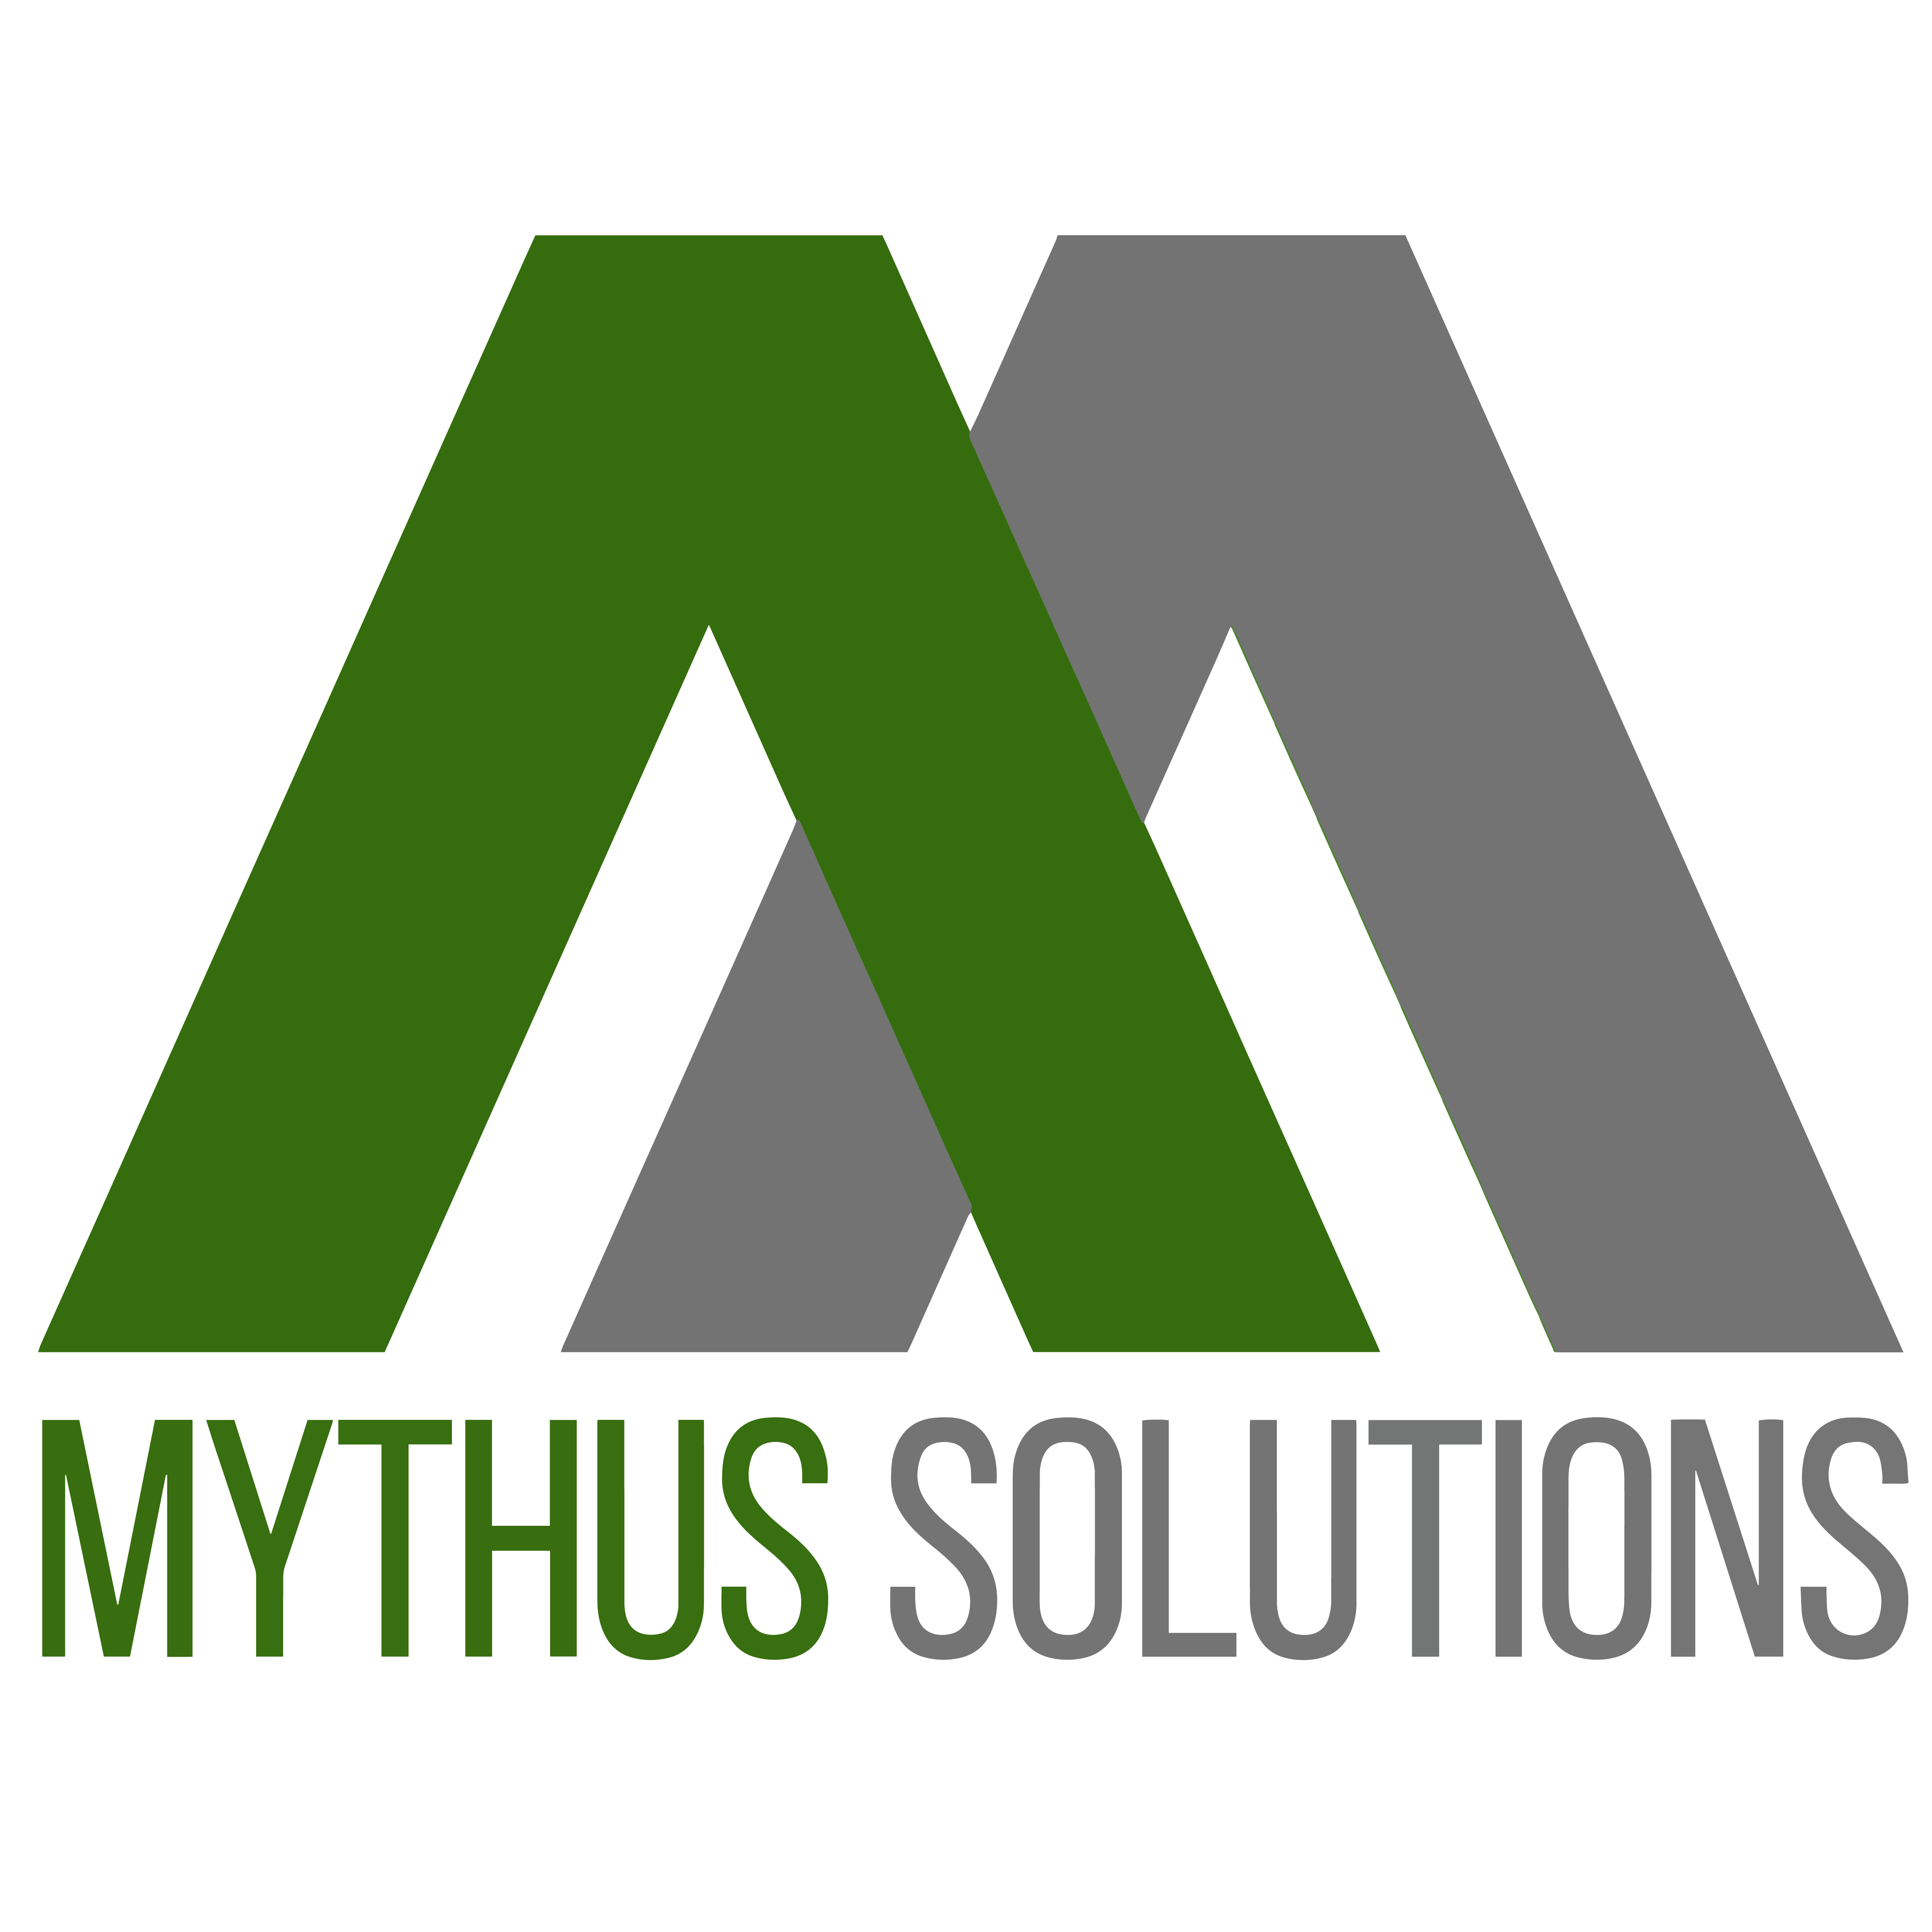 MYTHUS